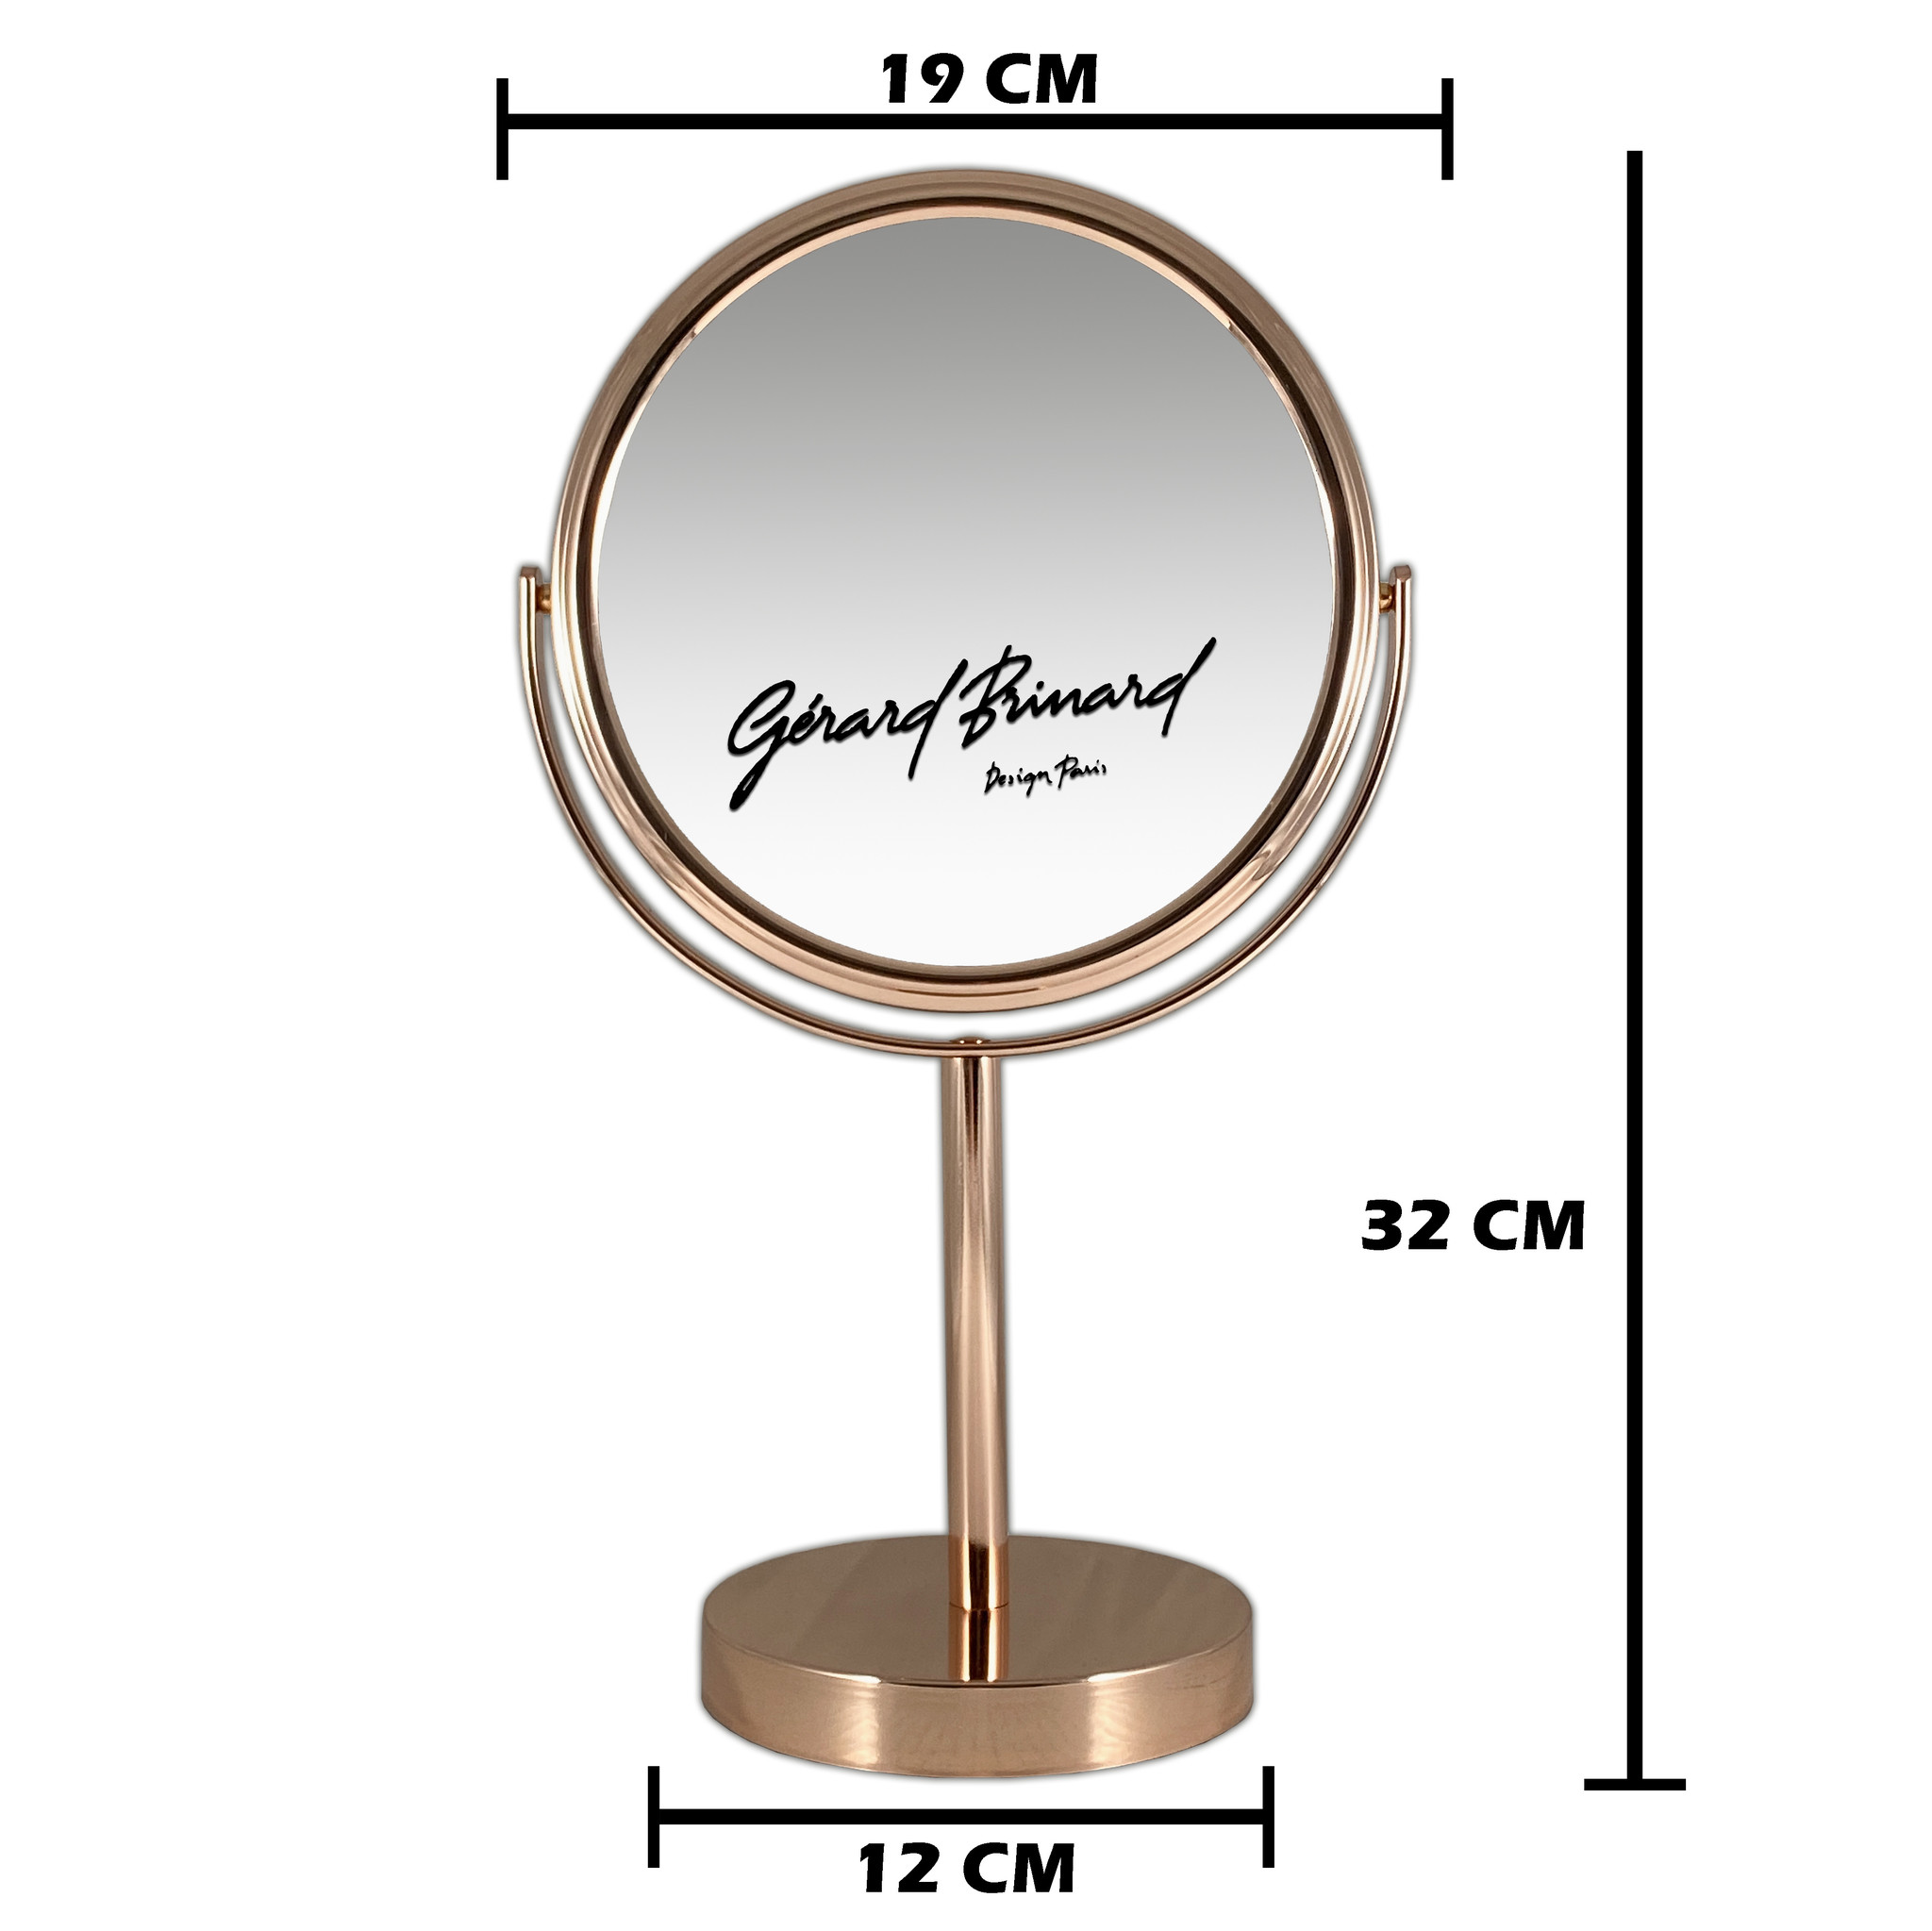 Gérard Brinard Metalen make-up spiegel rosegoud- 5x vergroting 18cmØ